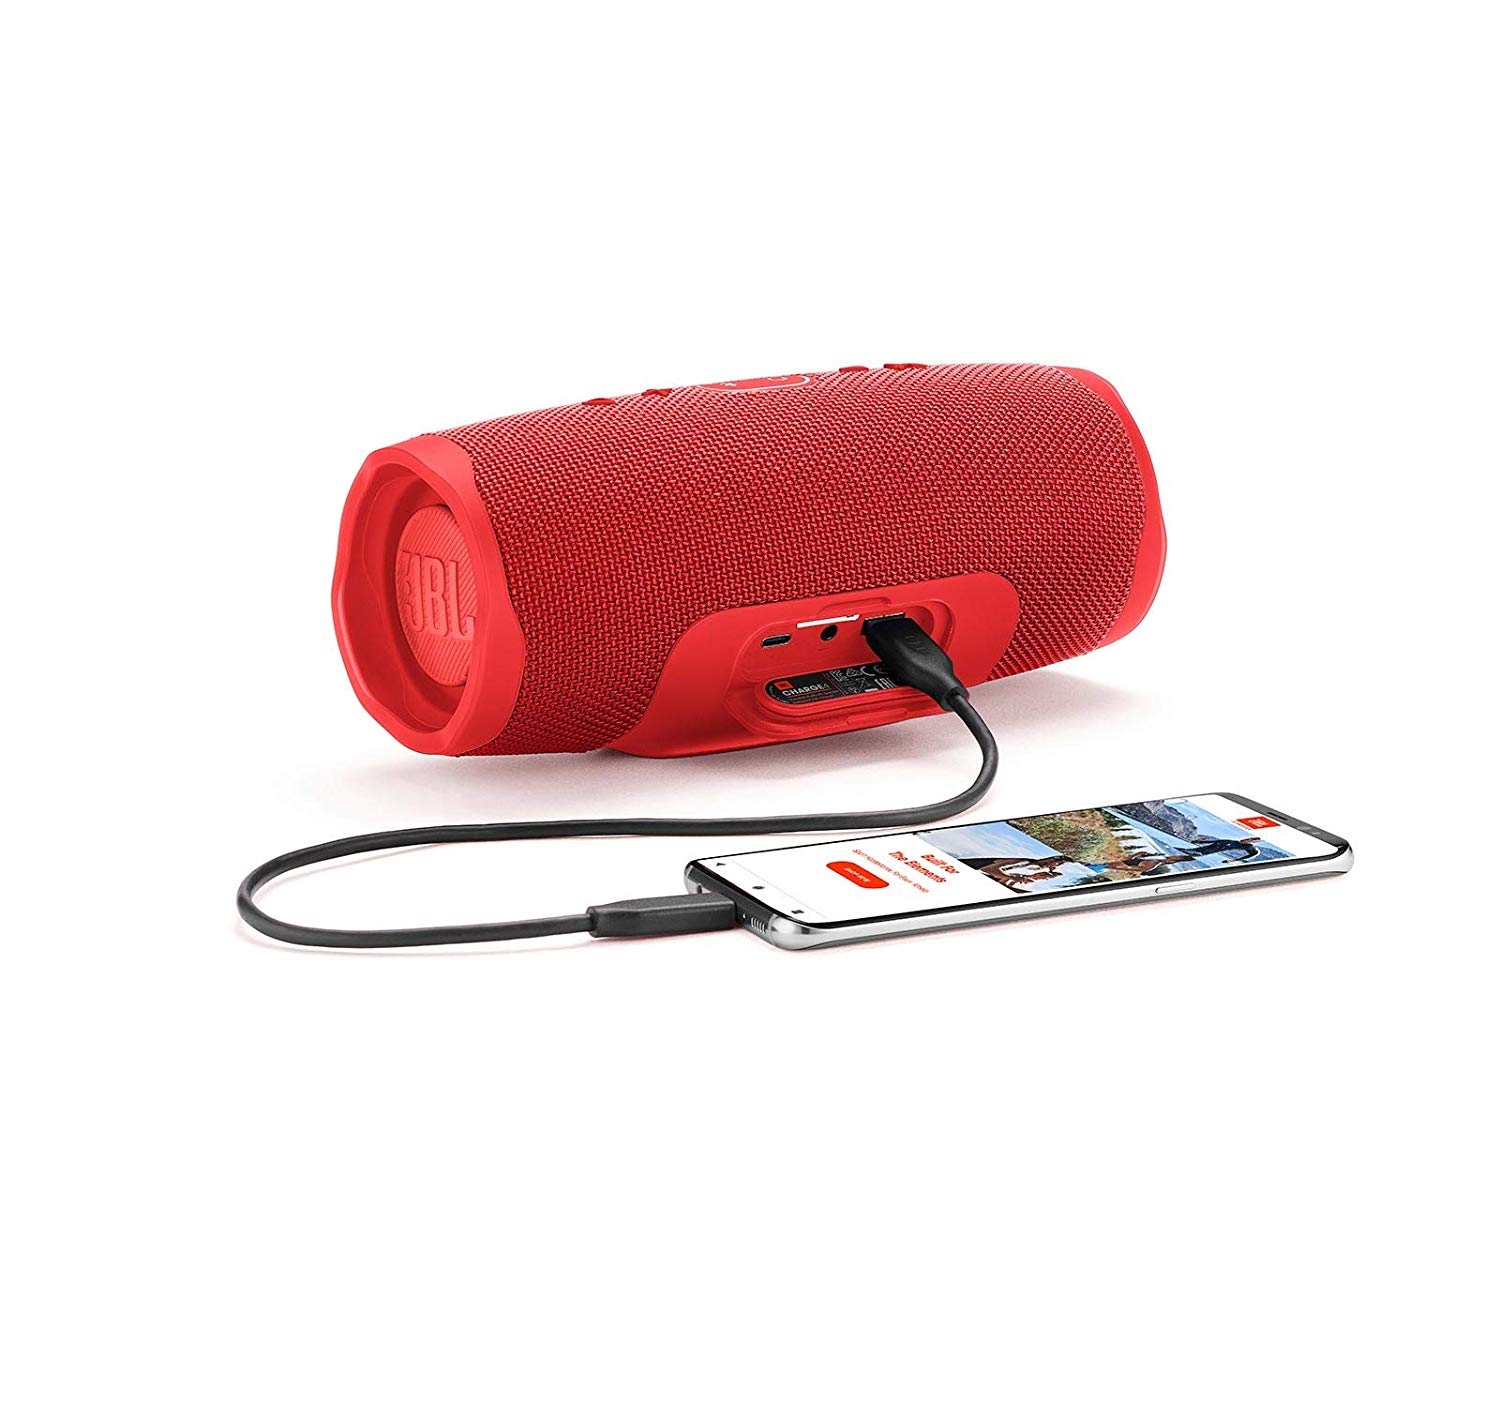 JBL Charge 4 Portable Waterproof Wireless Bluetooth Speaker - Red - image 2 of 5